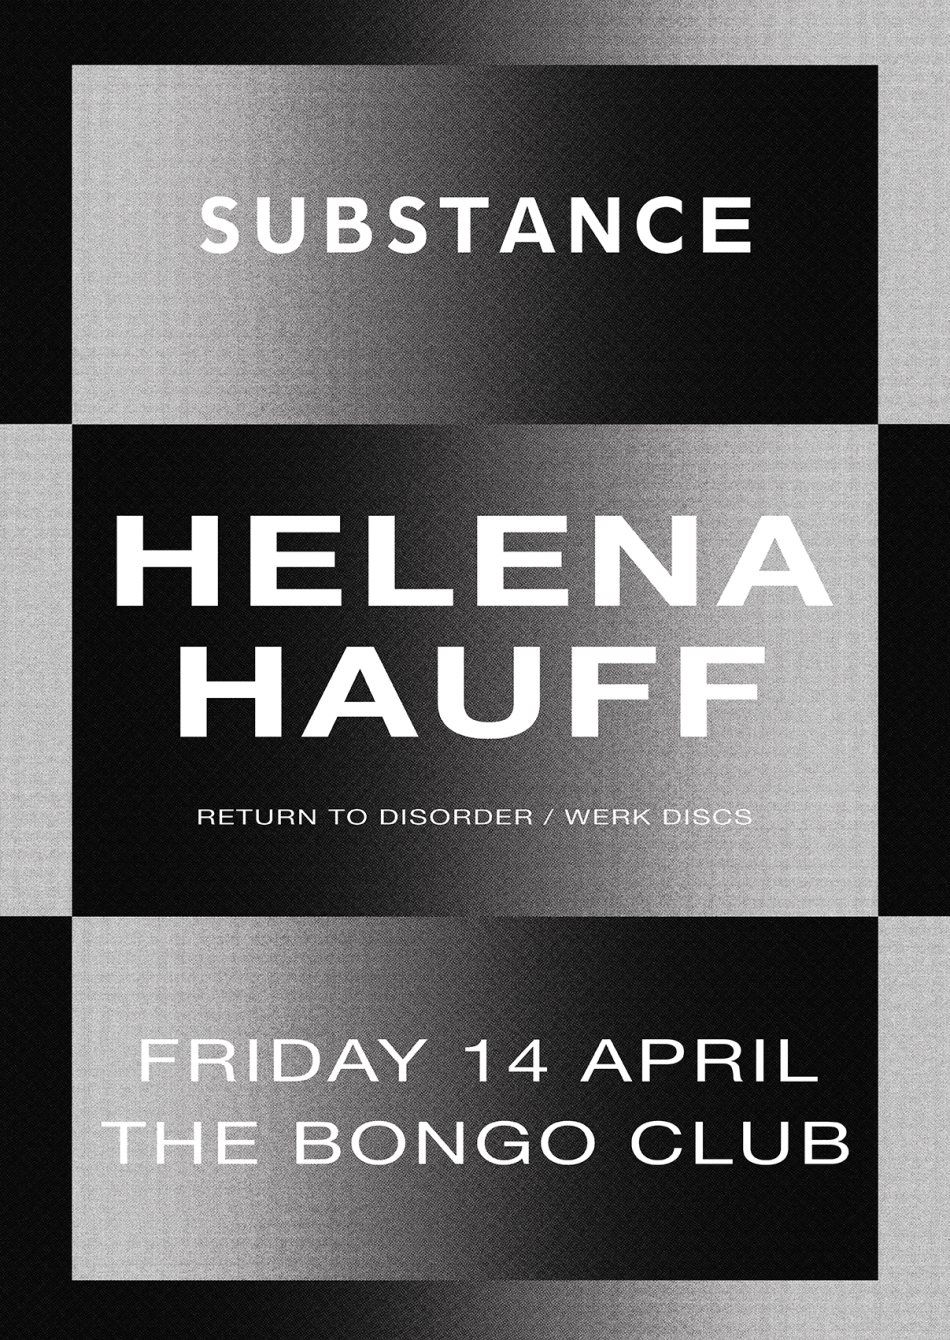 Substance - Helena Hauff (Return To Disorder) (3hr set) - Flyer back